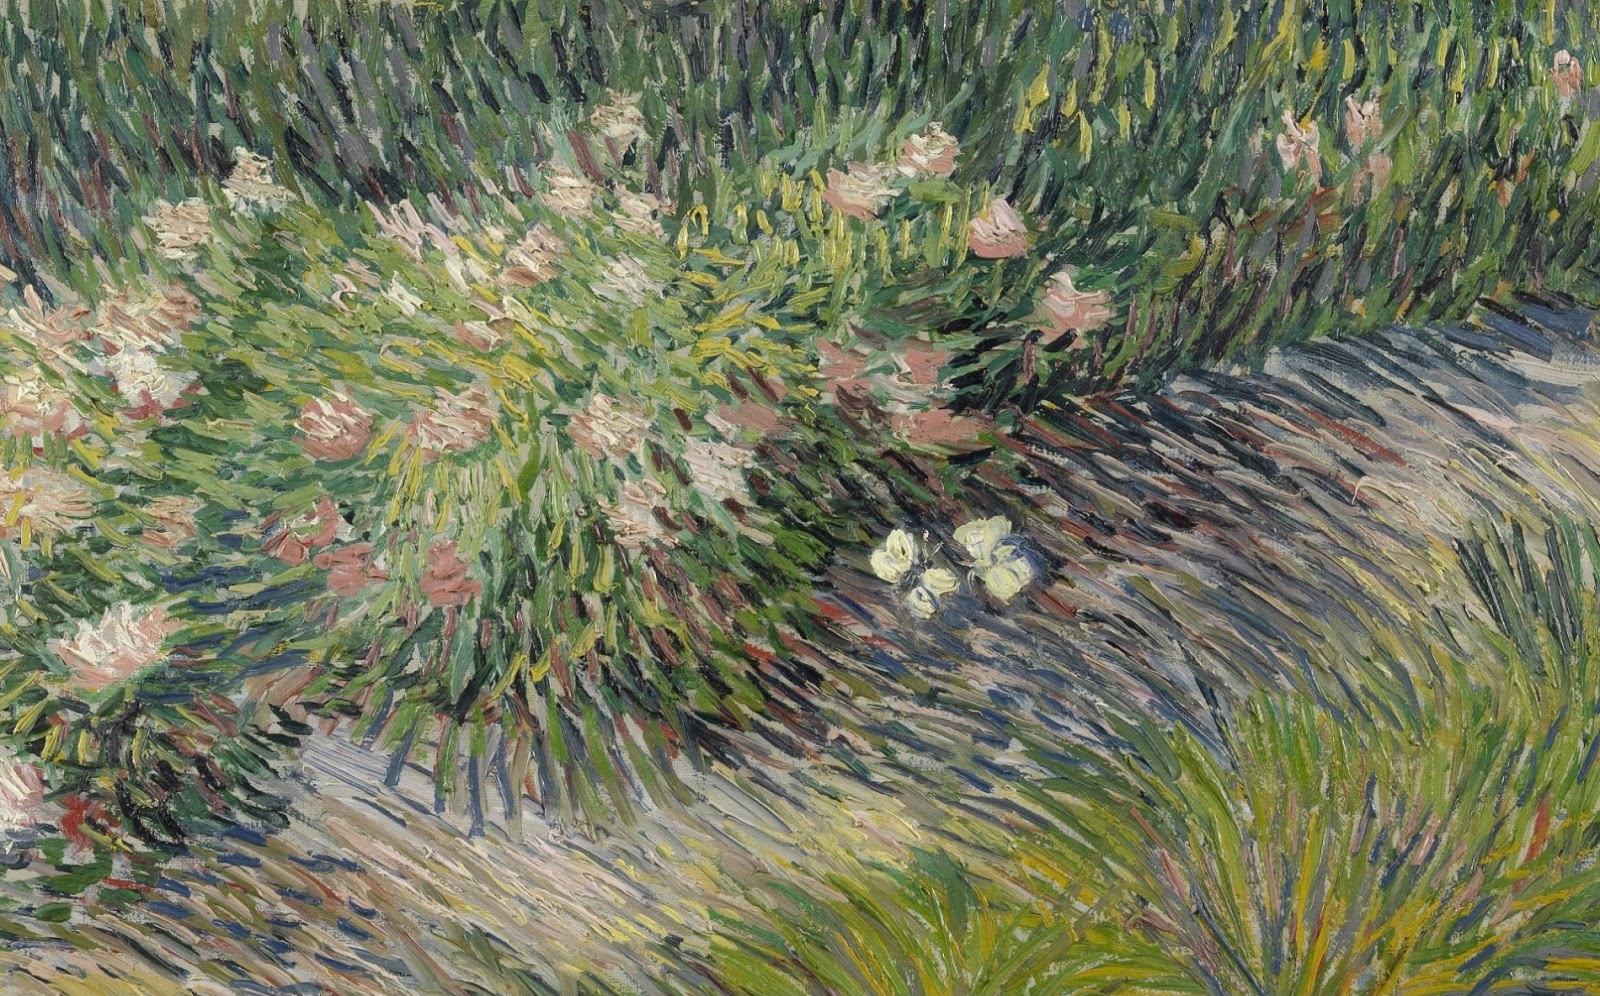 Vincent+Van+Gogh-1853-1890 (491).jpg